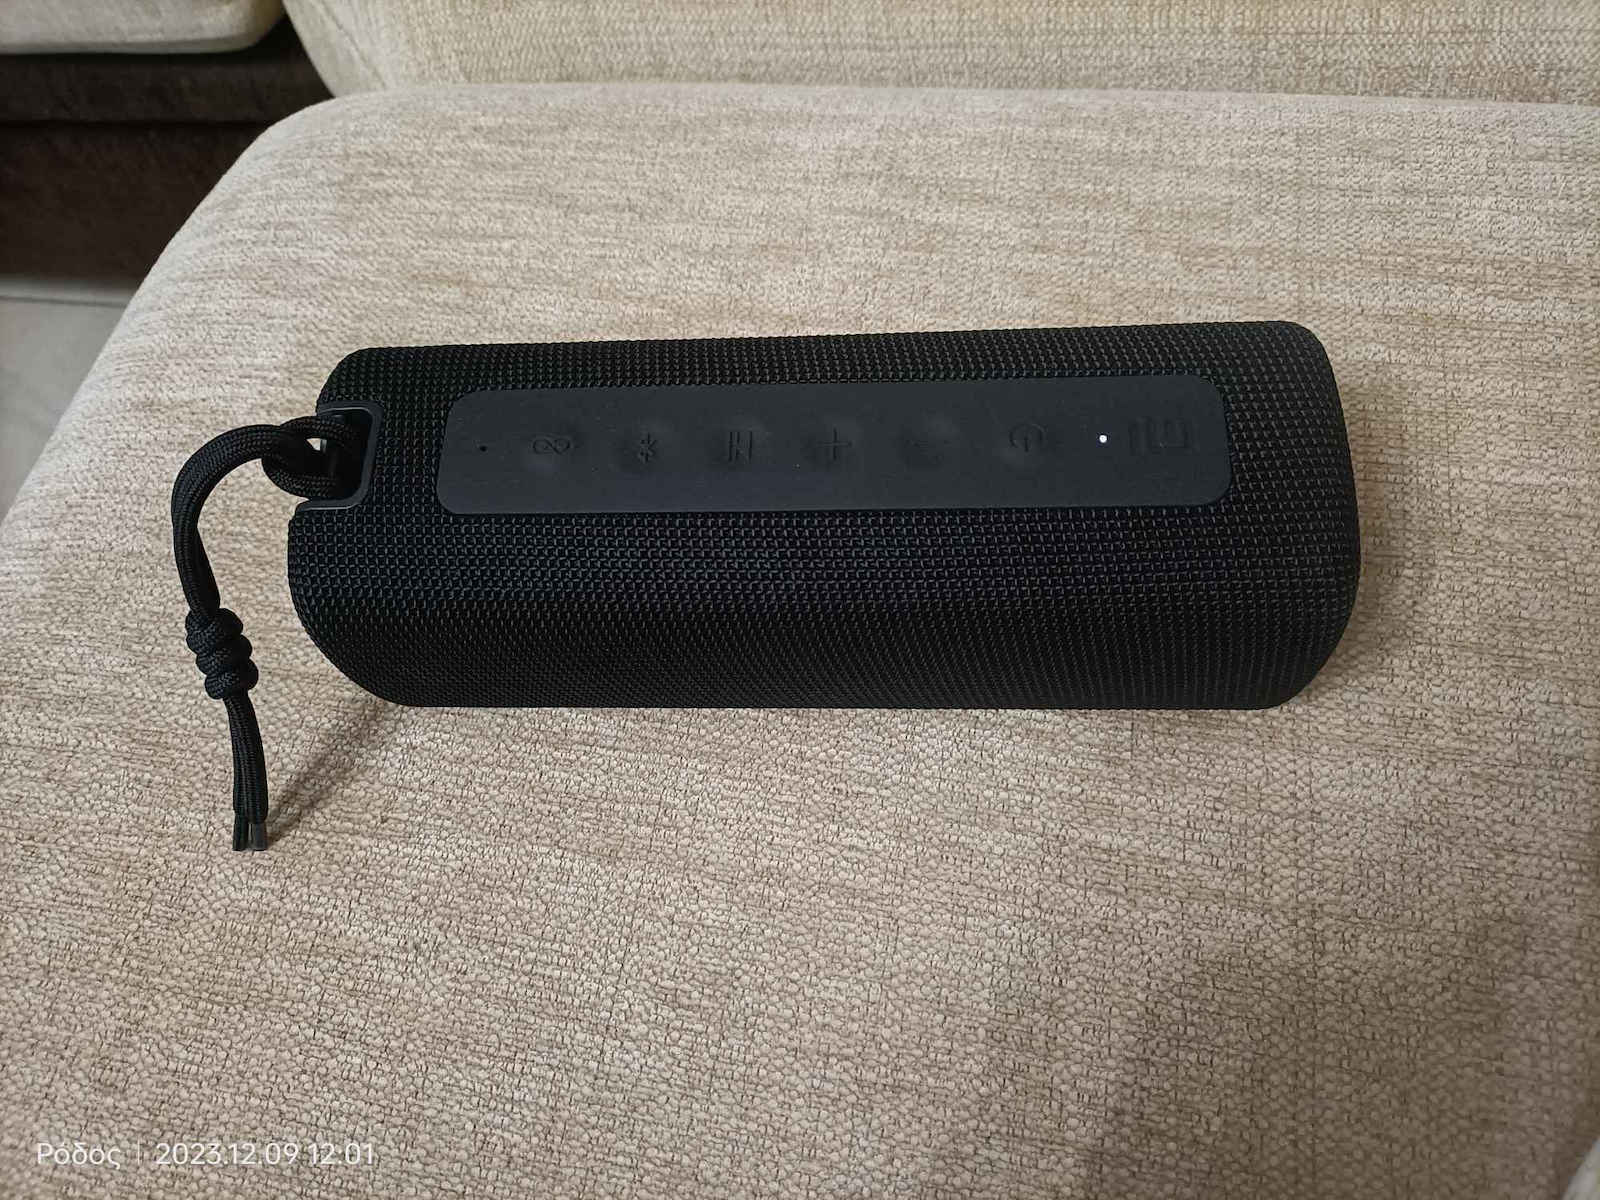 Altavoz Bluetooth Xiaomi Mi Portable Bluetooth Speaker (16W) Red_Xiaomi  Store